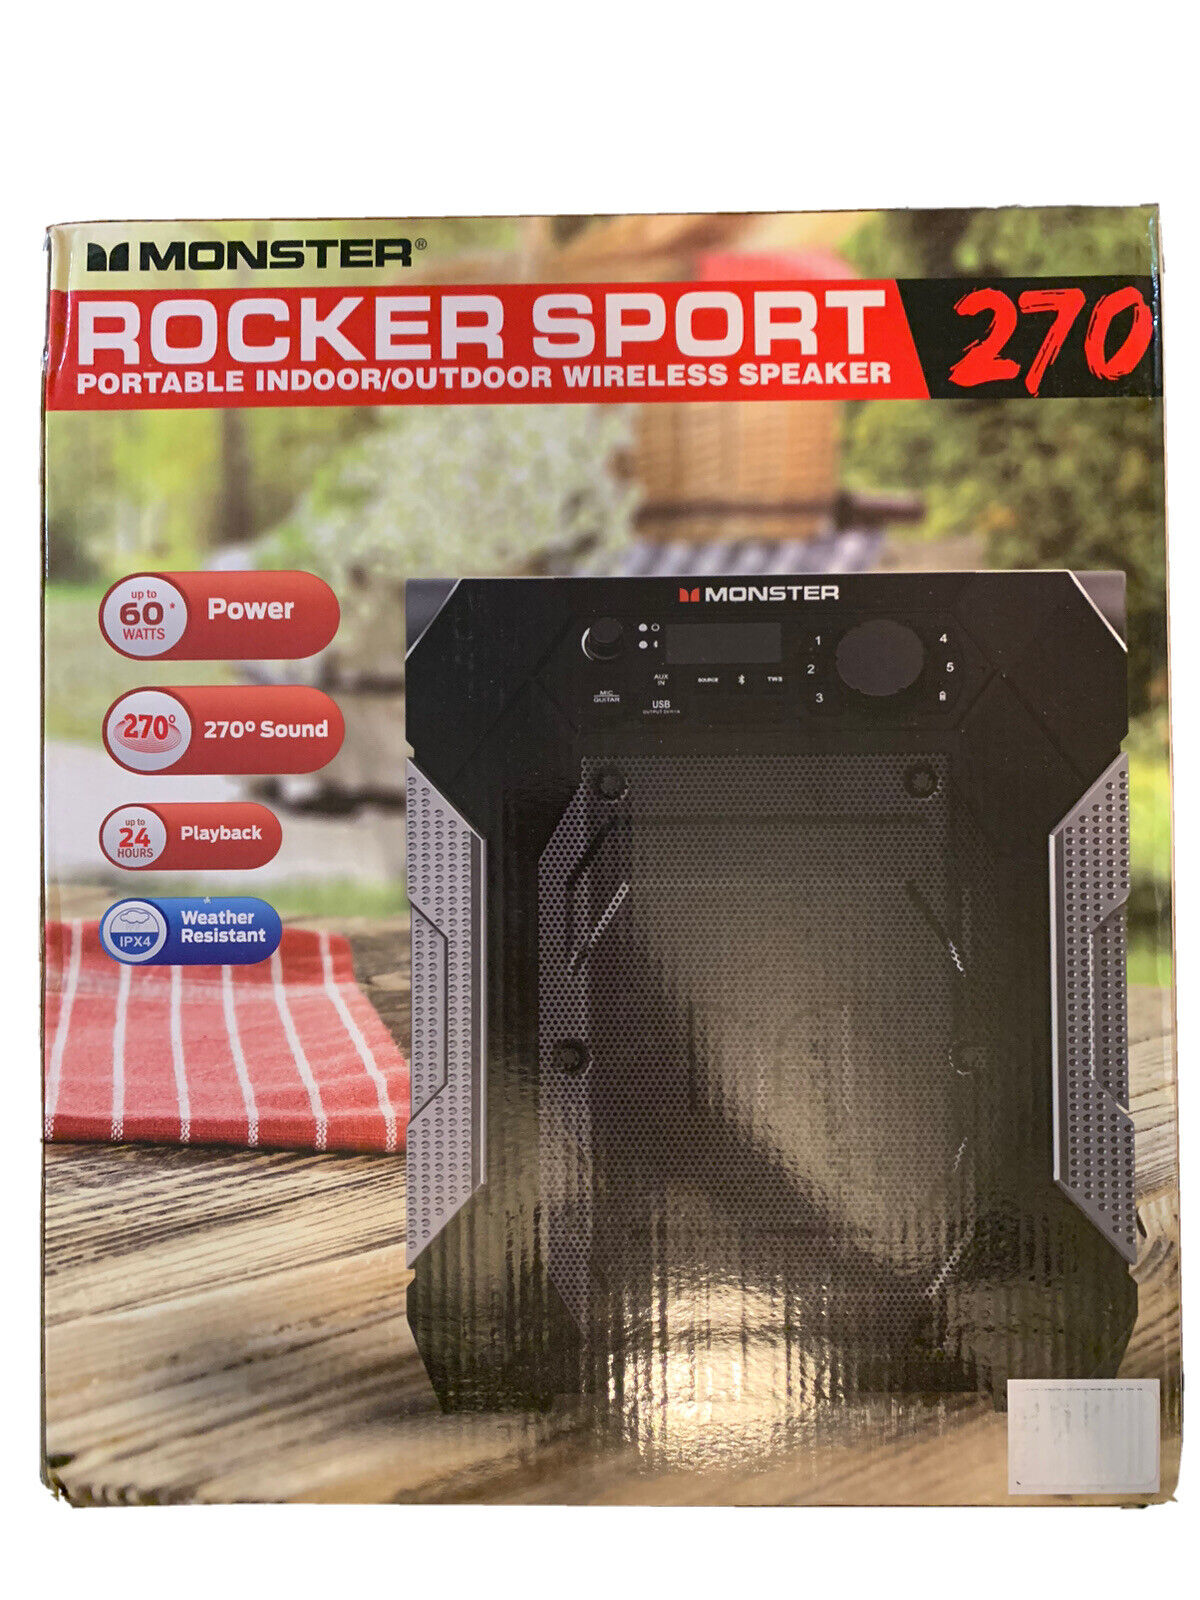 Monster Rocker 270 Sport Portable Indoor/Outdoor Wireless Speaker Black/ Slate eBay